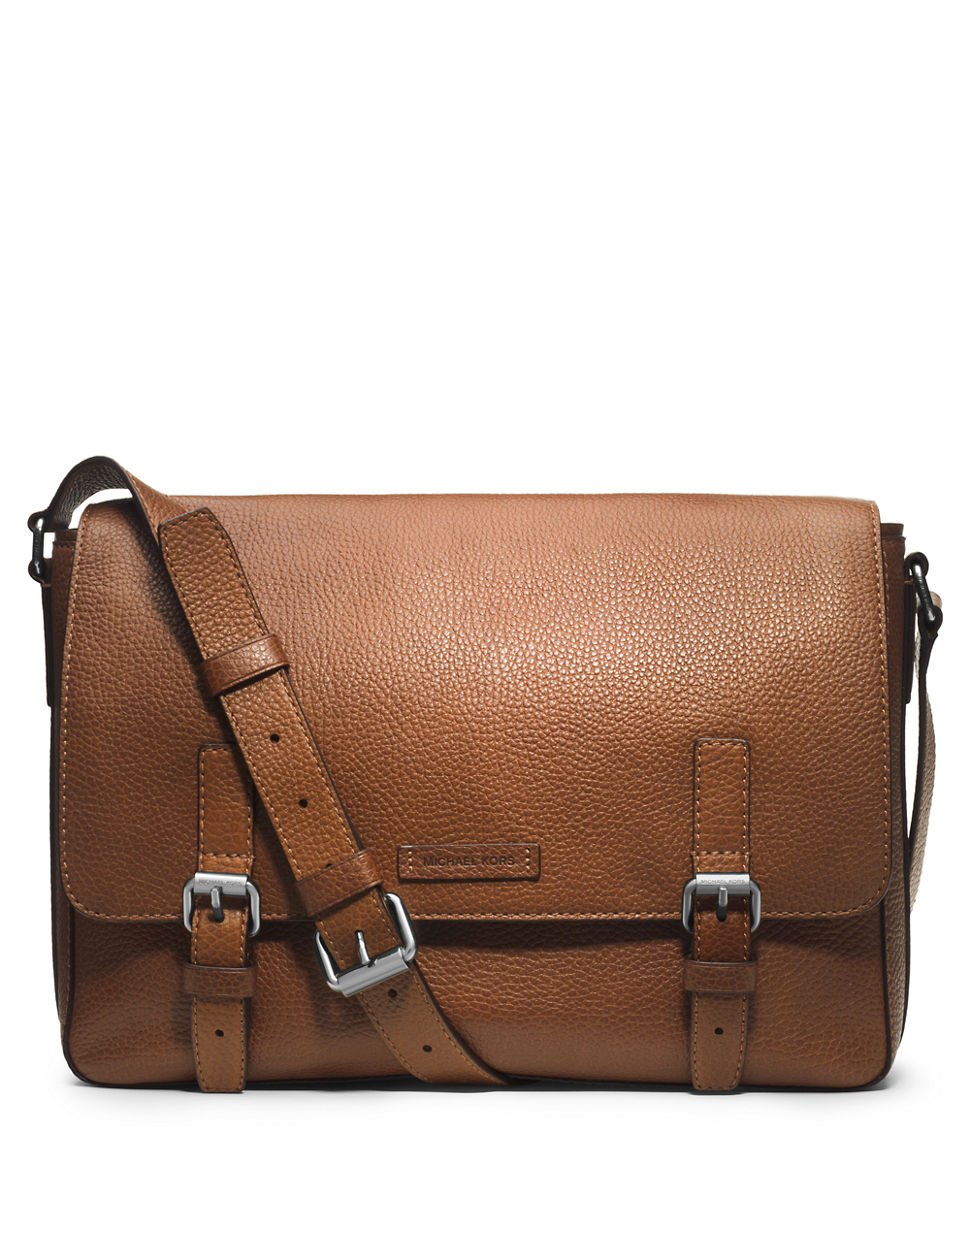 Michael Kors Bryant Leather Messenger Bag in Brown for Men - Lyst